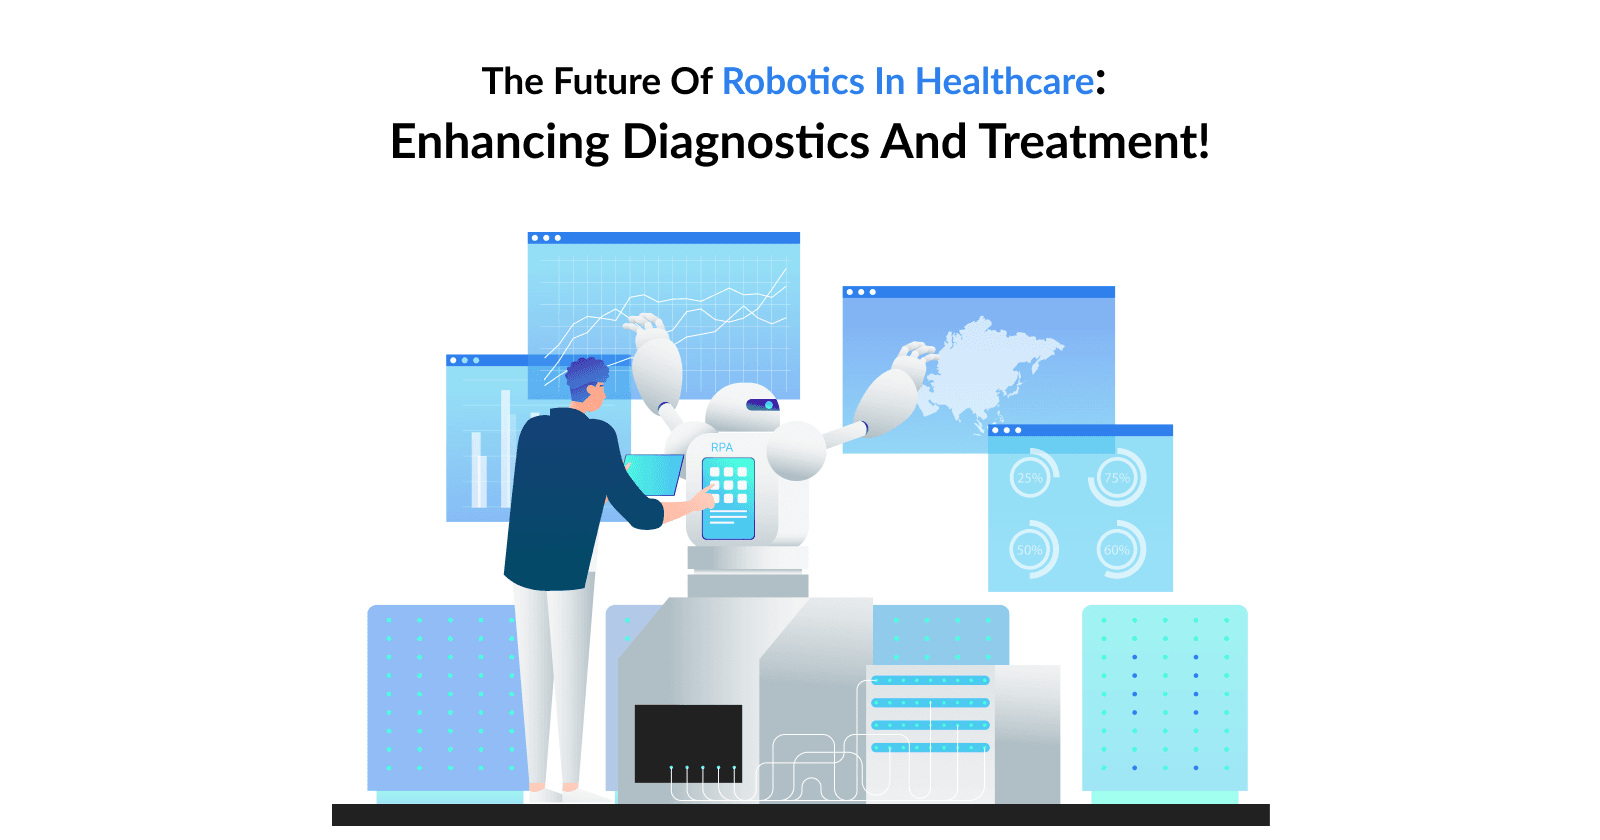 The Future of Robotics in Healthcare: Enhancing Diagnostics and Treatment!